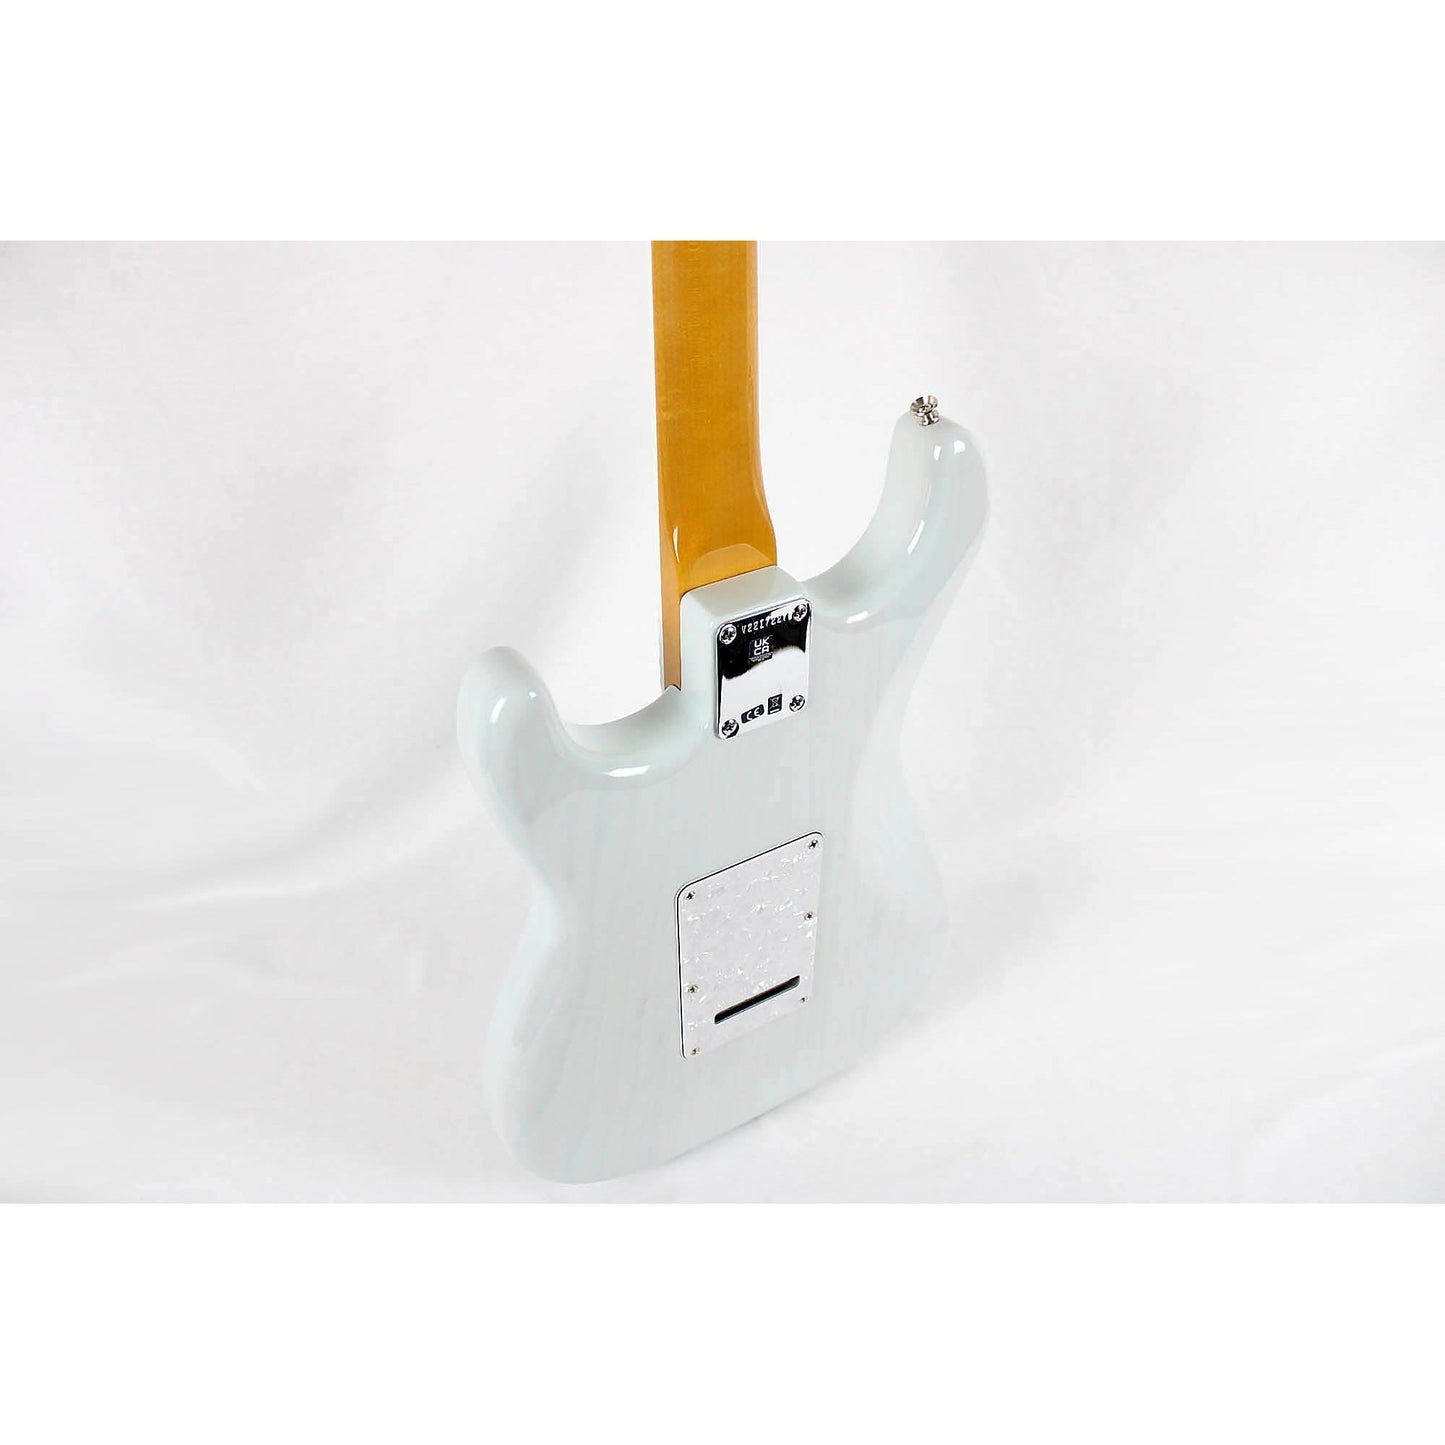 Fender Kenny Wayne Shepherd Stratocaster - Transparent Faded Sonic Blue - Leitz Music-885978311699-0117510811